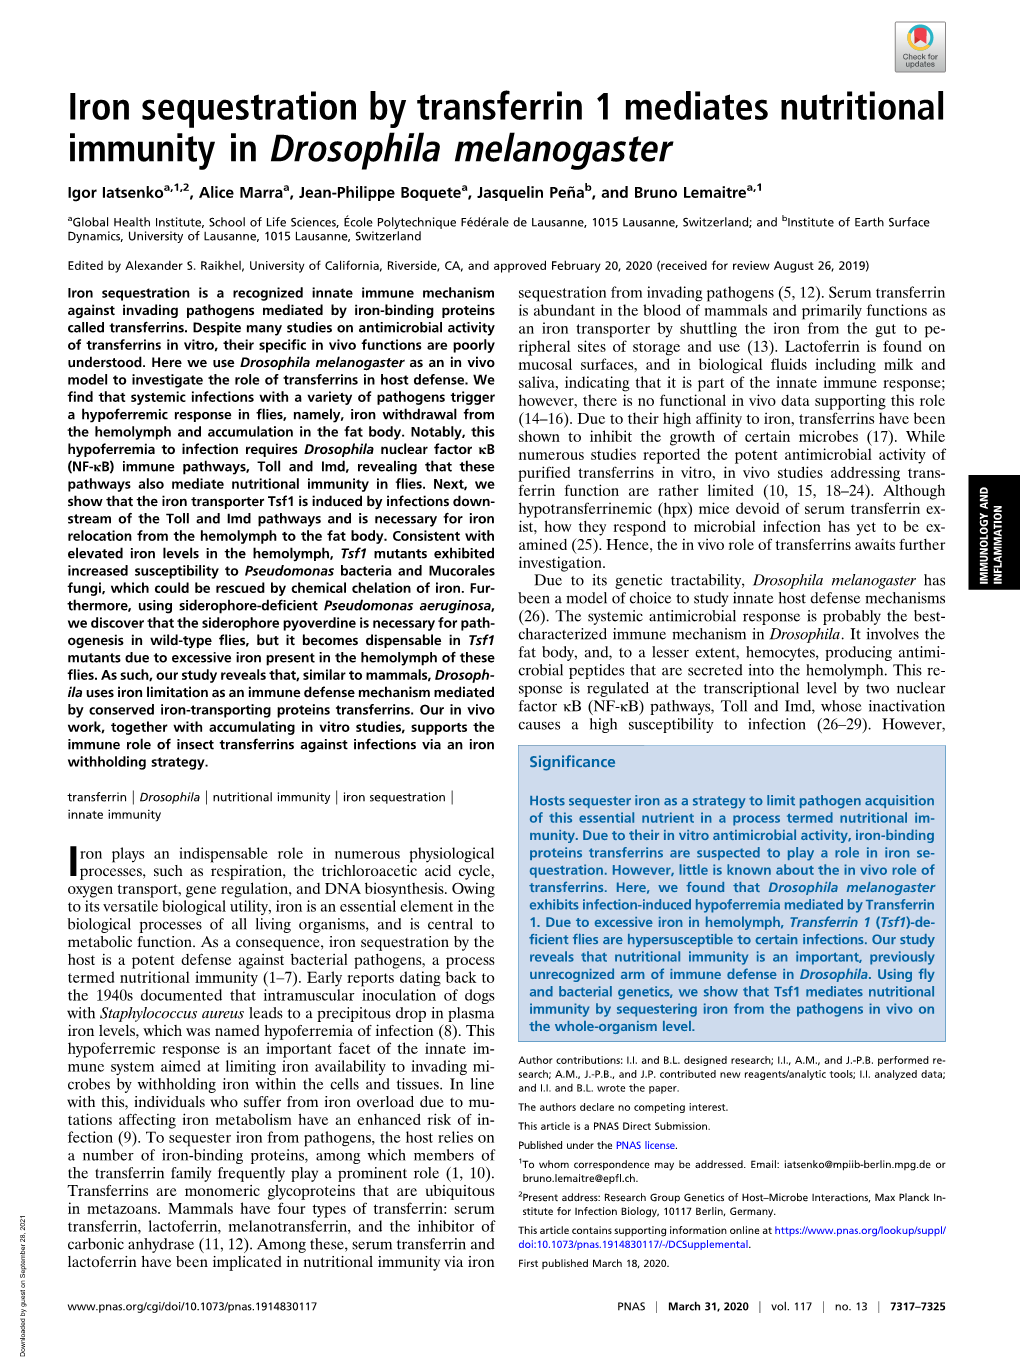 Iron Sequestration by Transferrin 1 Mediates Nutritional Immunity in Drosophila Melanogaster